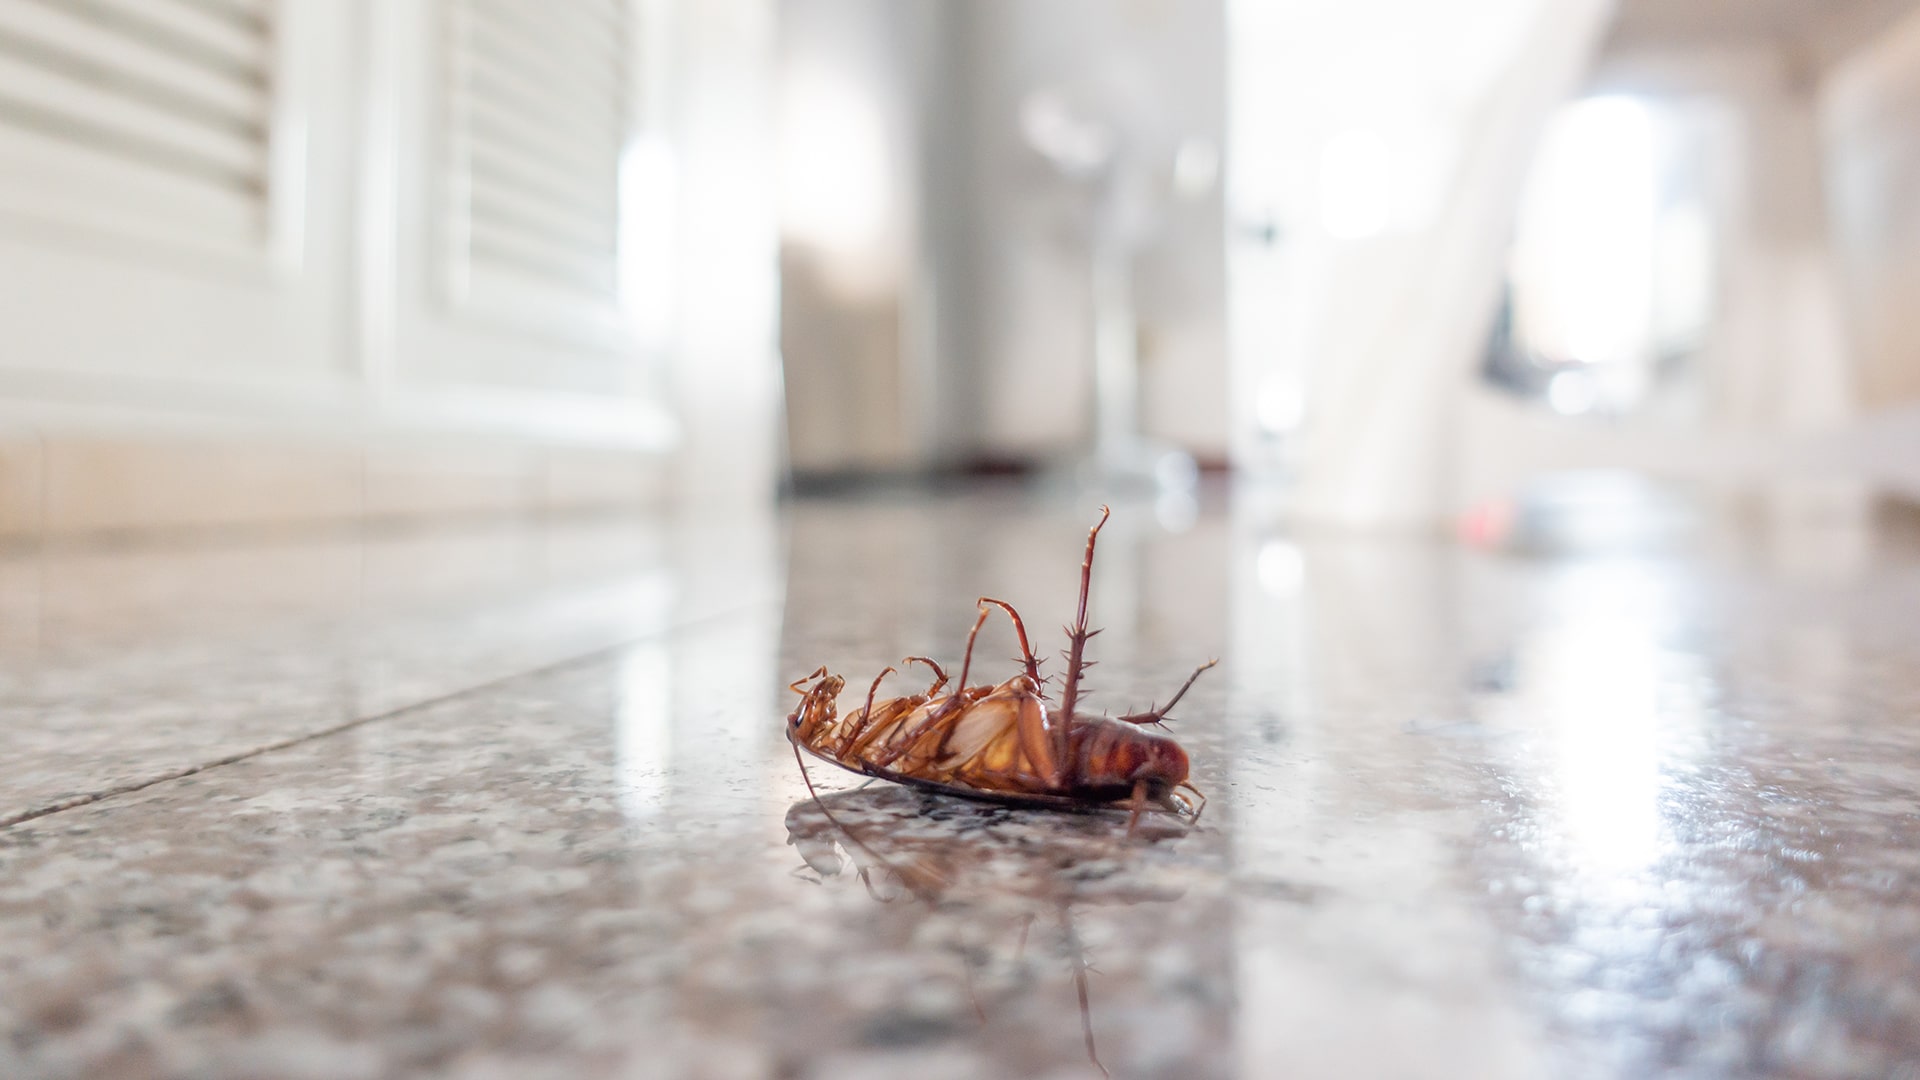 Image of a dead roach